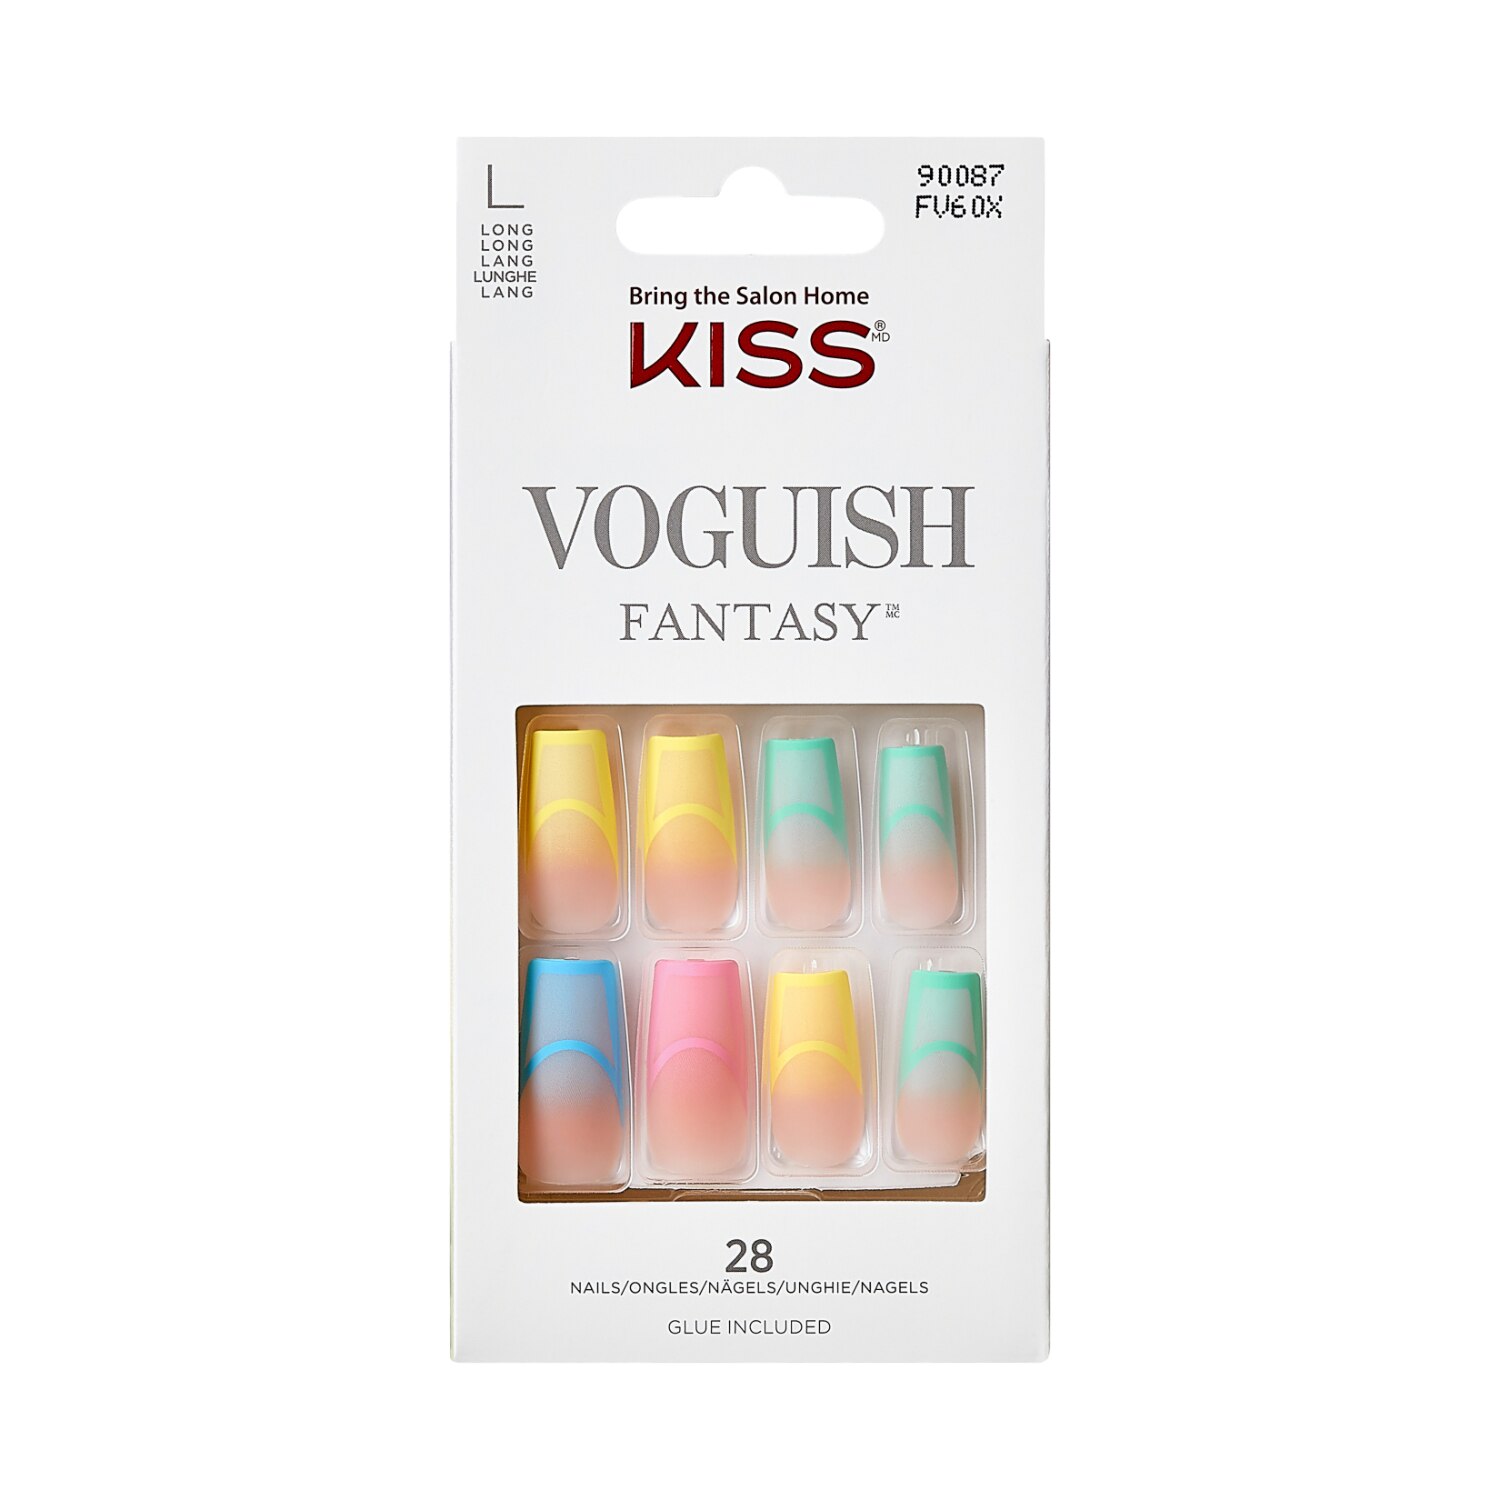 KISS Voguish Fantasy False Nails